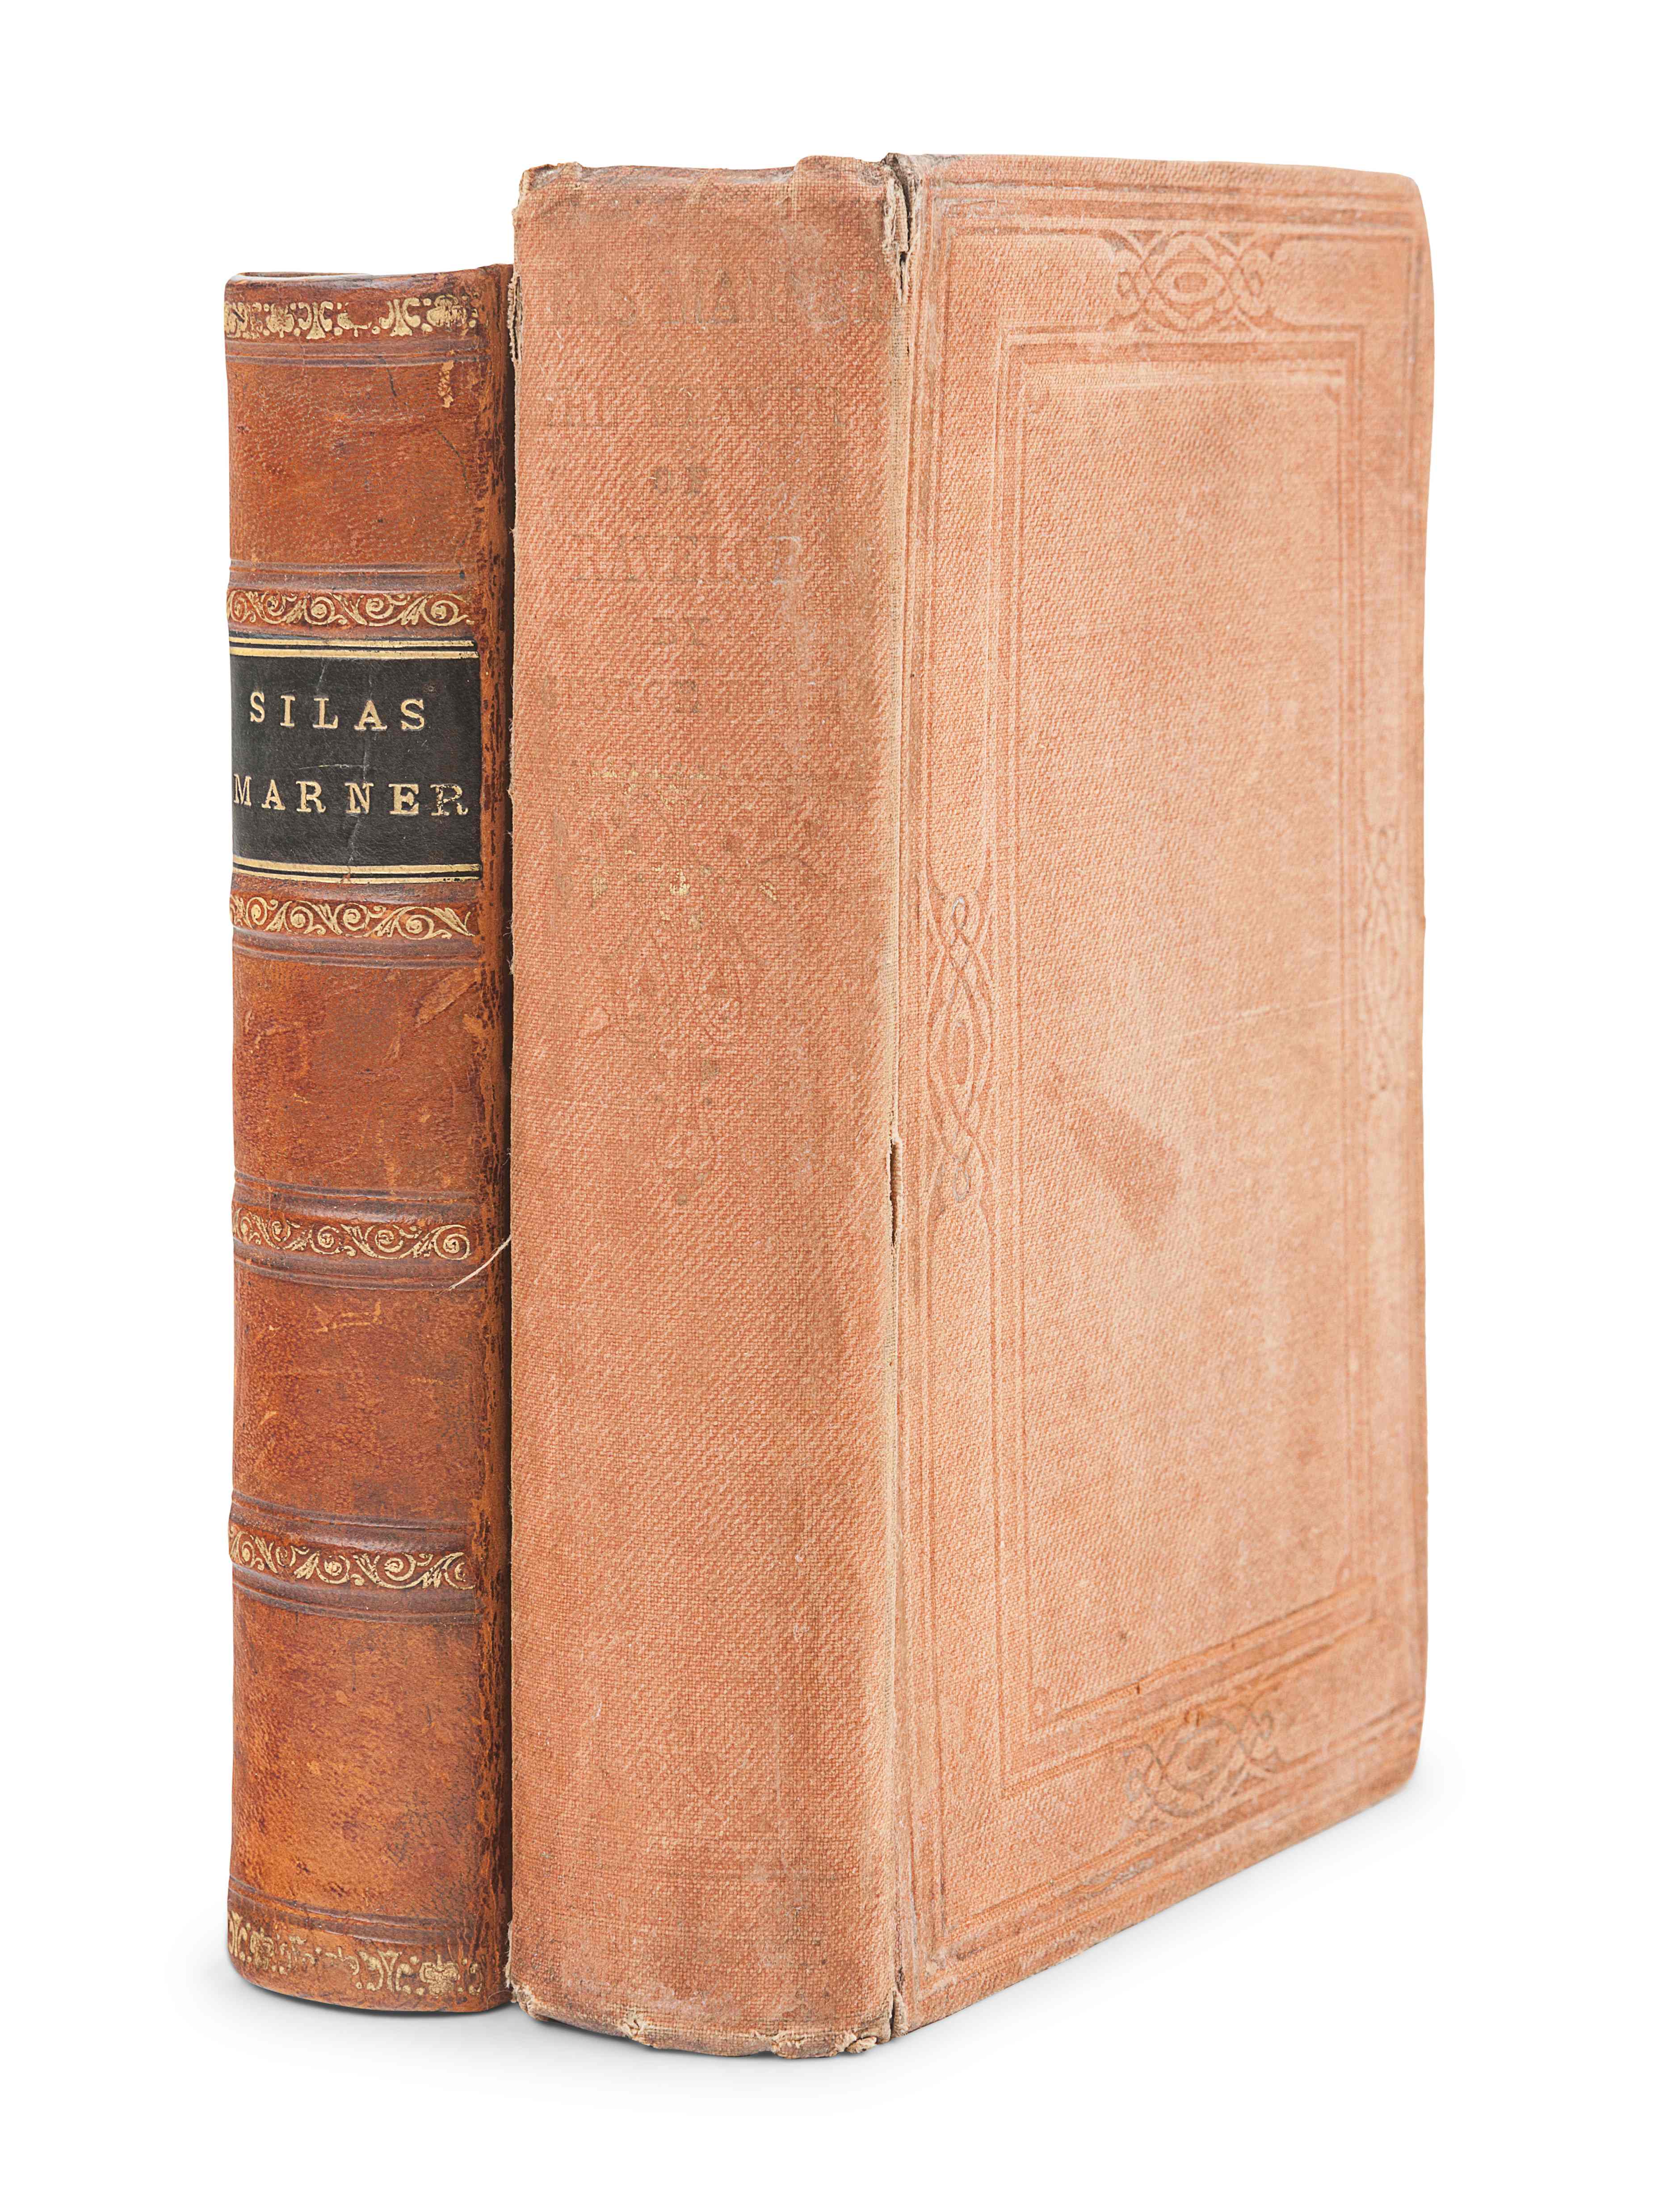 ELIOT, George (1819-1880). Silas Marner: The Weaver of Raveloe. Edinburgh & London: William Blackwoo - Image 3 of 3